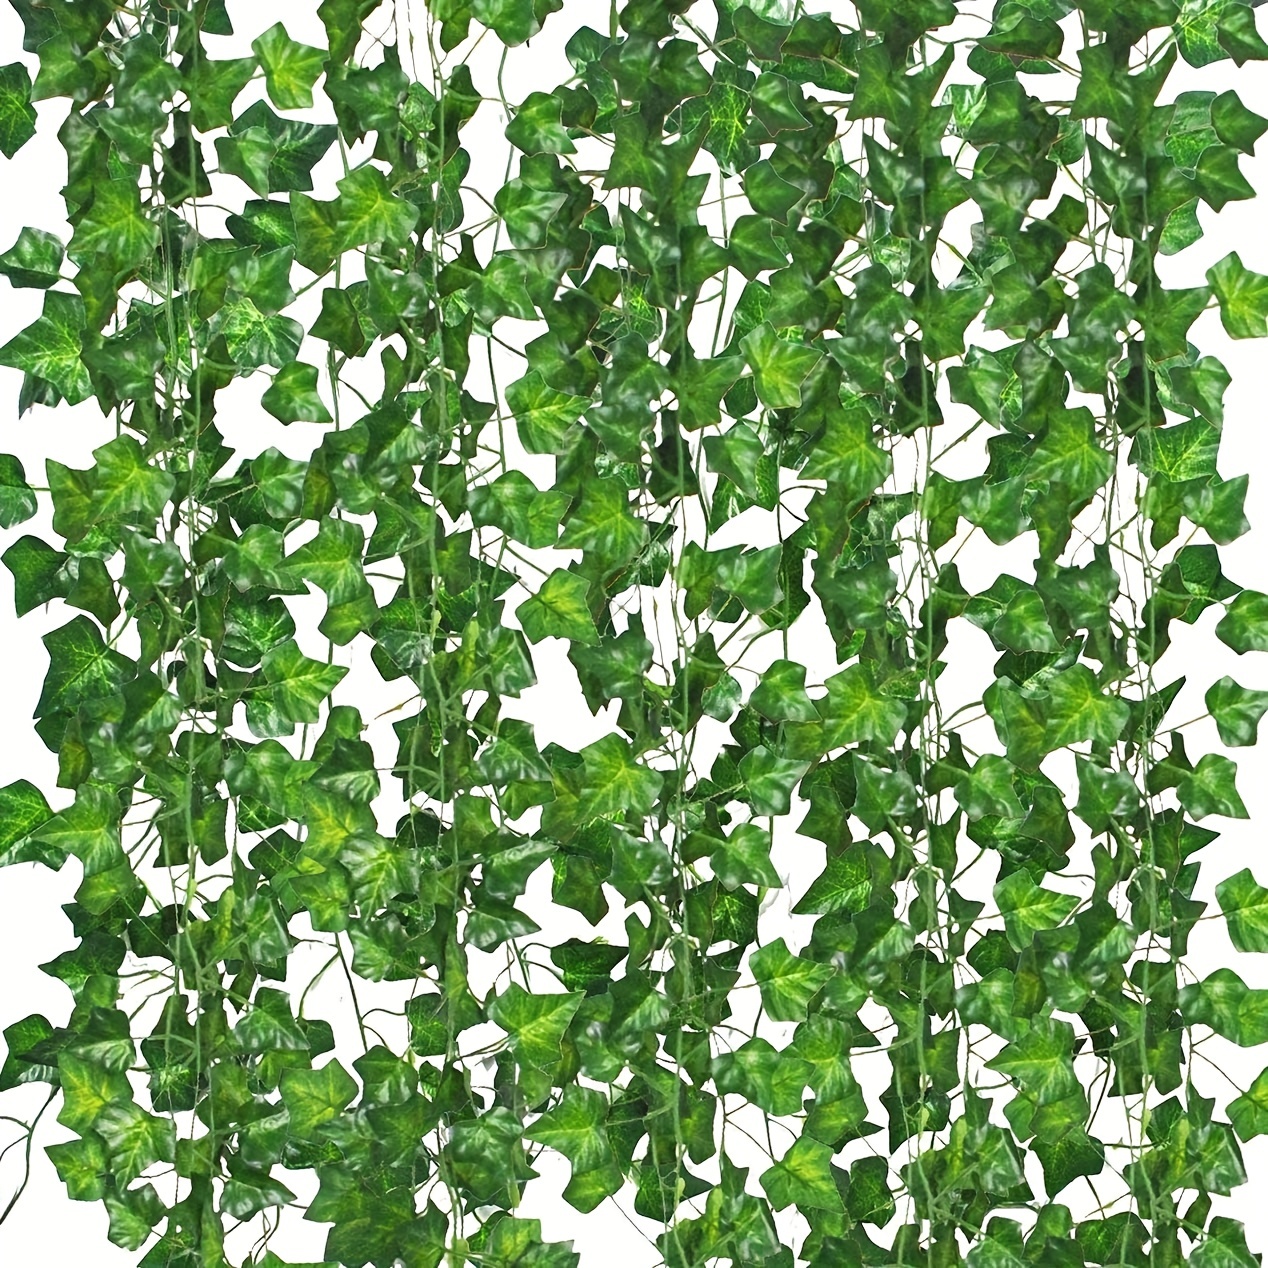 Leaveforme Fake Ivy Leaves Artificial Ivy Greenery Vines for Room